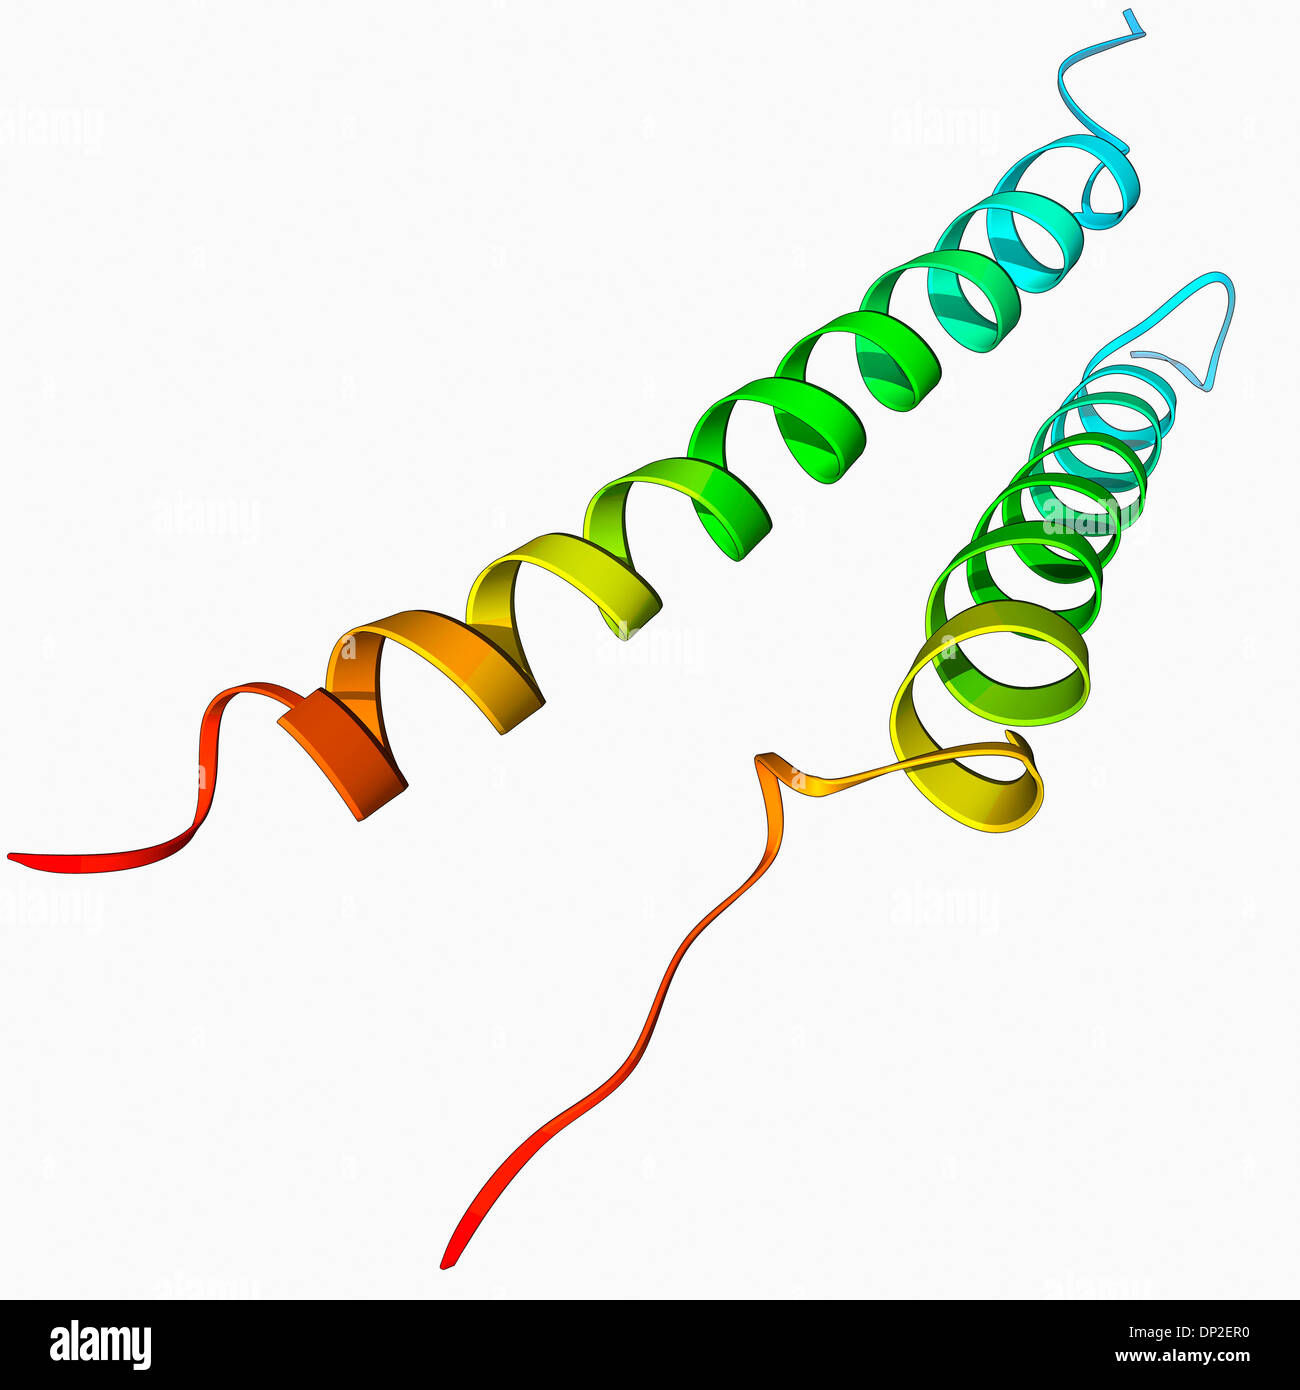 Integrin transmembrane domain Stock Photo